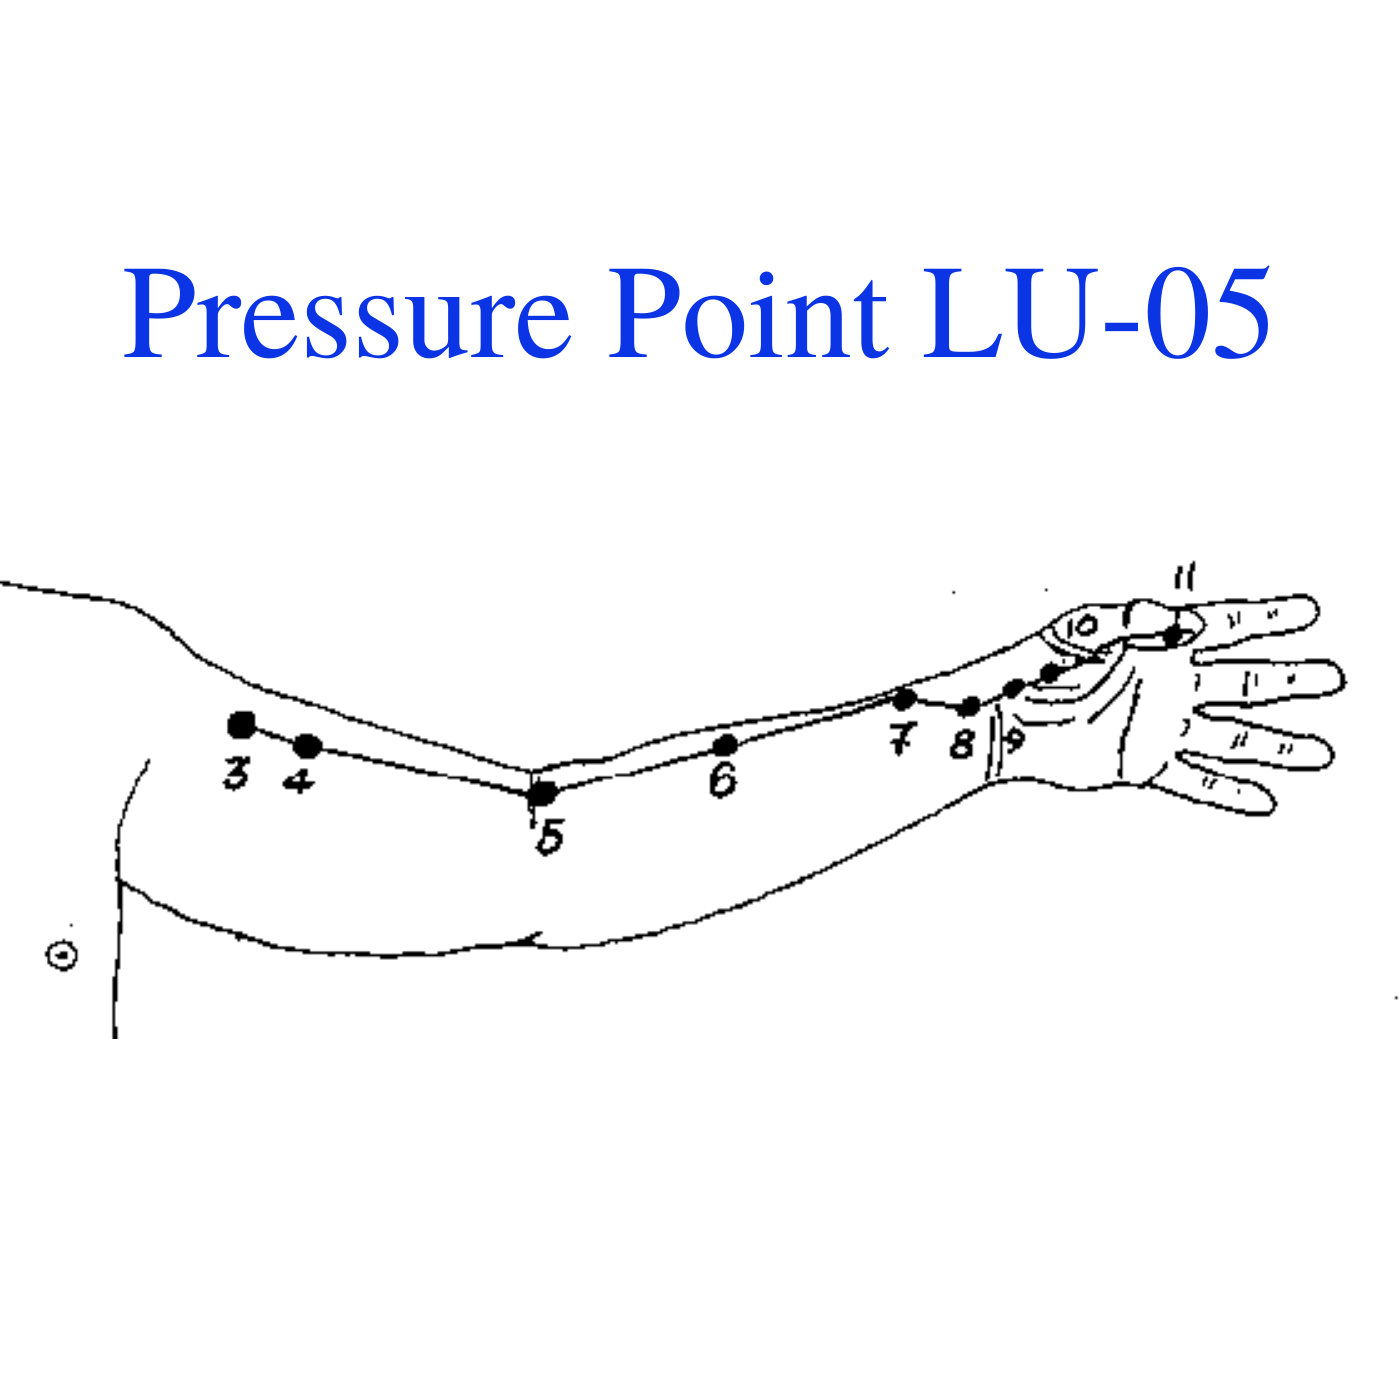 * Pressure Point LU-05